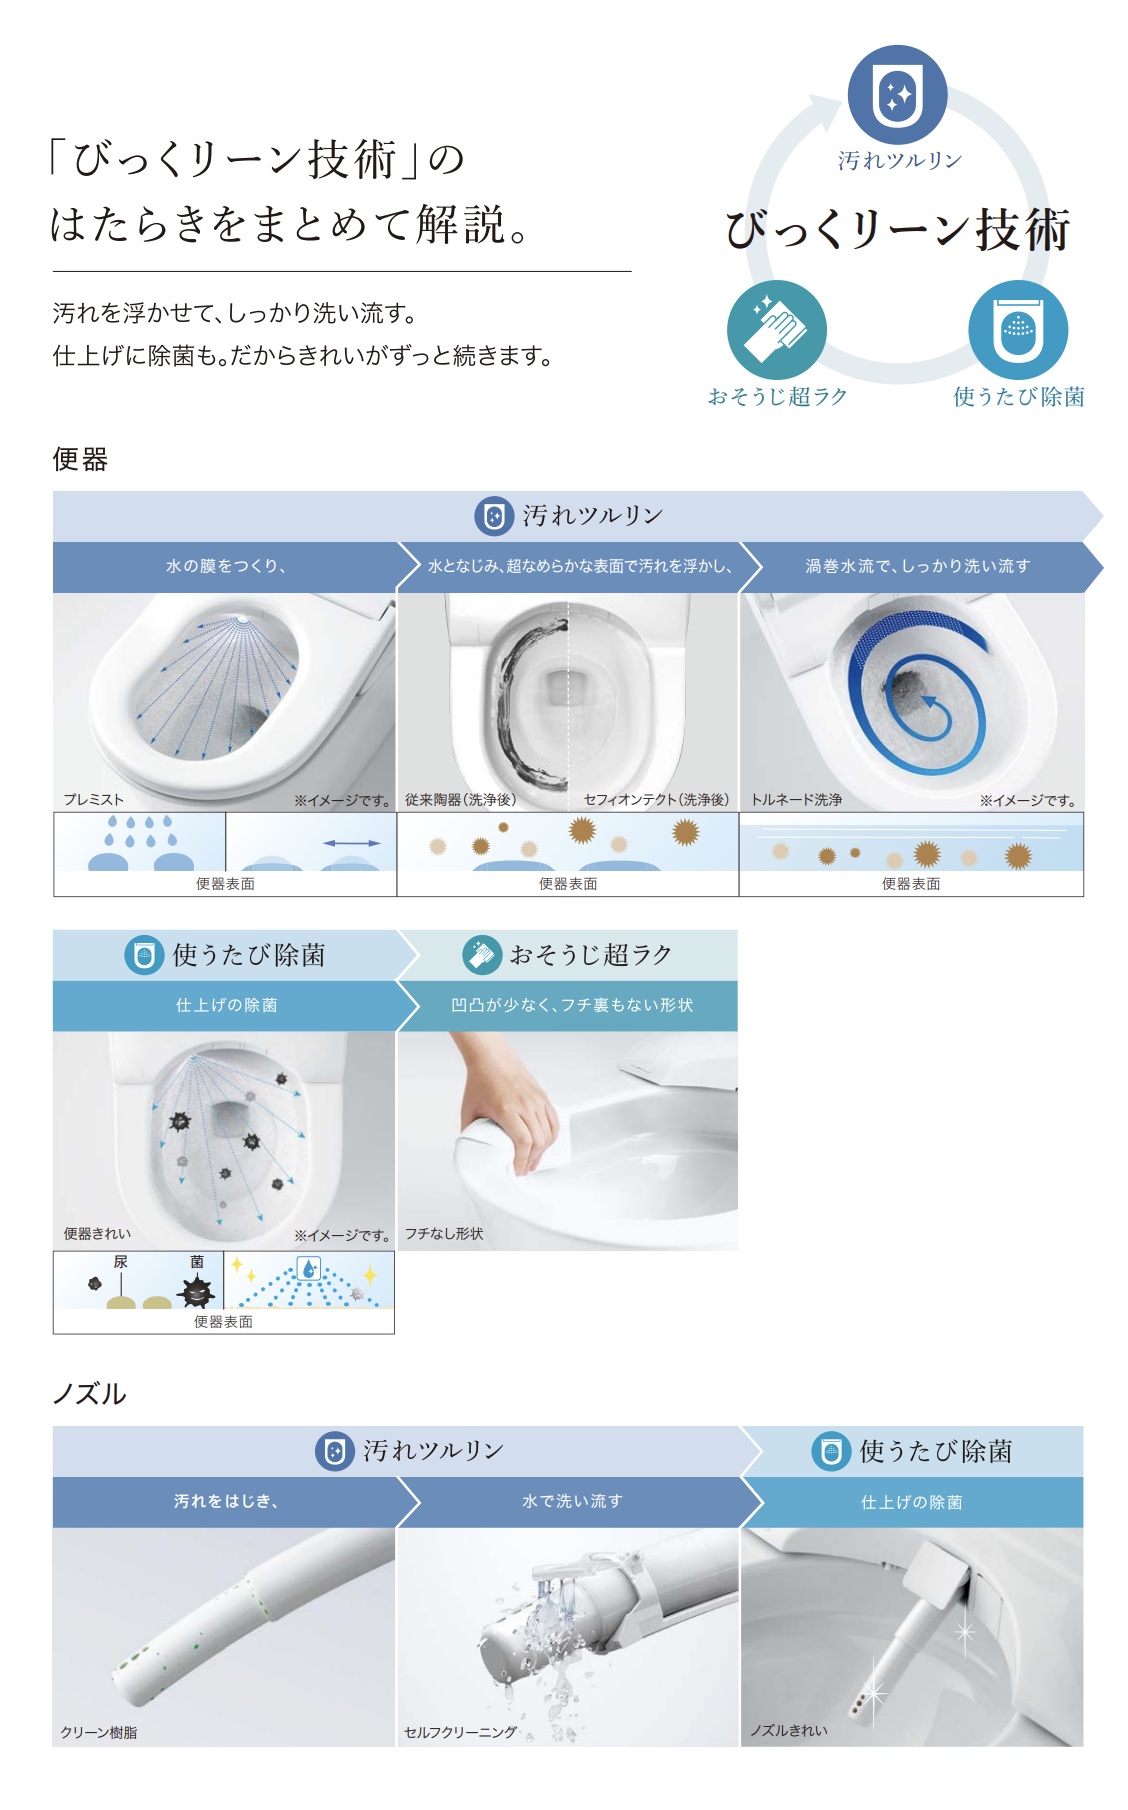 CES9710のトイレきれいの技術